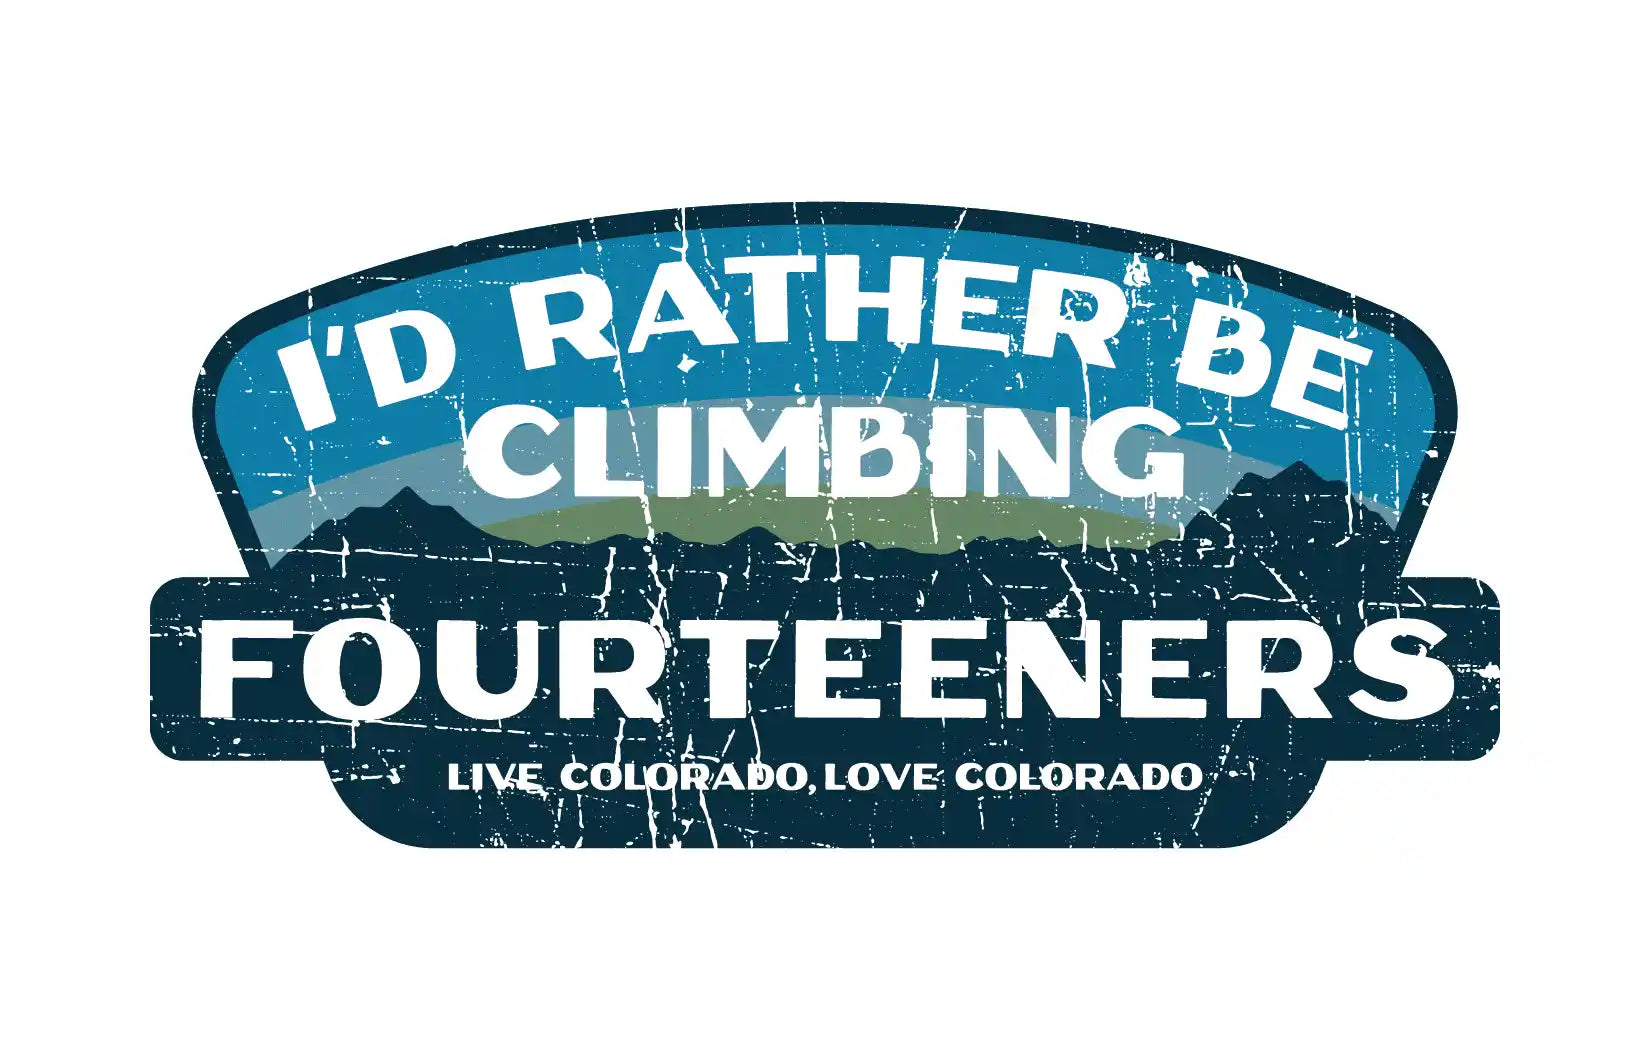 I'd rather be climbing fourteeners retro distressed design ©Cordillera Outdoors